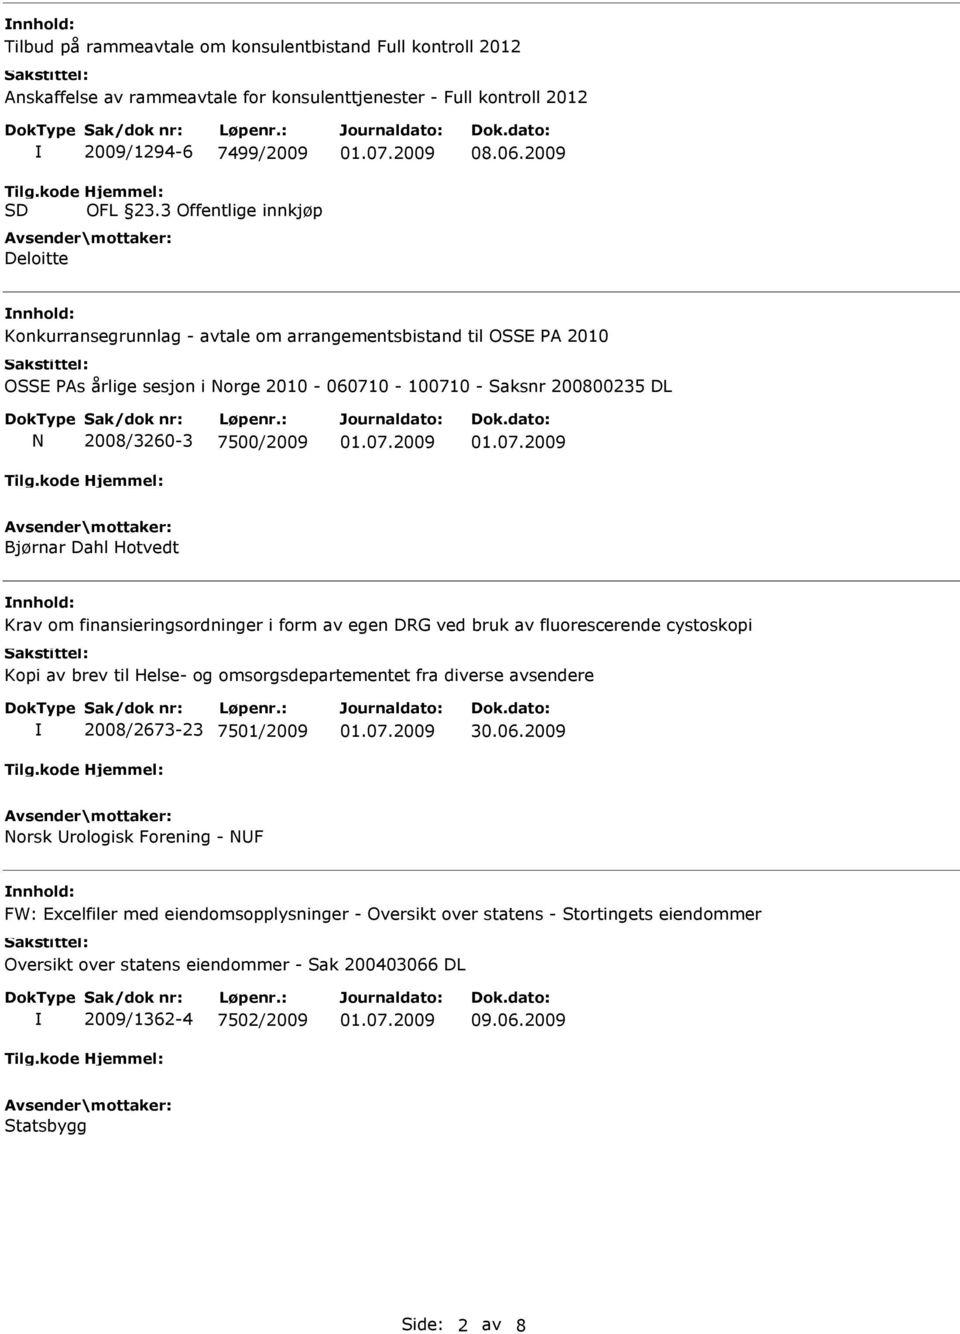 fluorescerende cystoskopi Kopi av brev til Helse- og omsorgsdepartementet fra diverse avsendere 2008/2673-23 7501/2009 Norsk rologisk Forening - NF FW: Excelfiler med